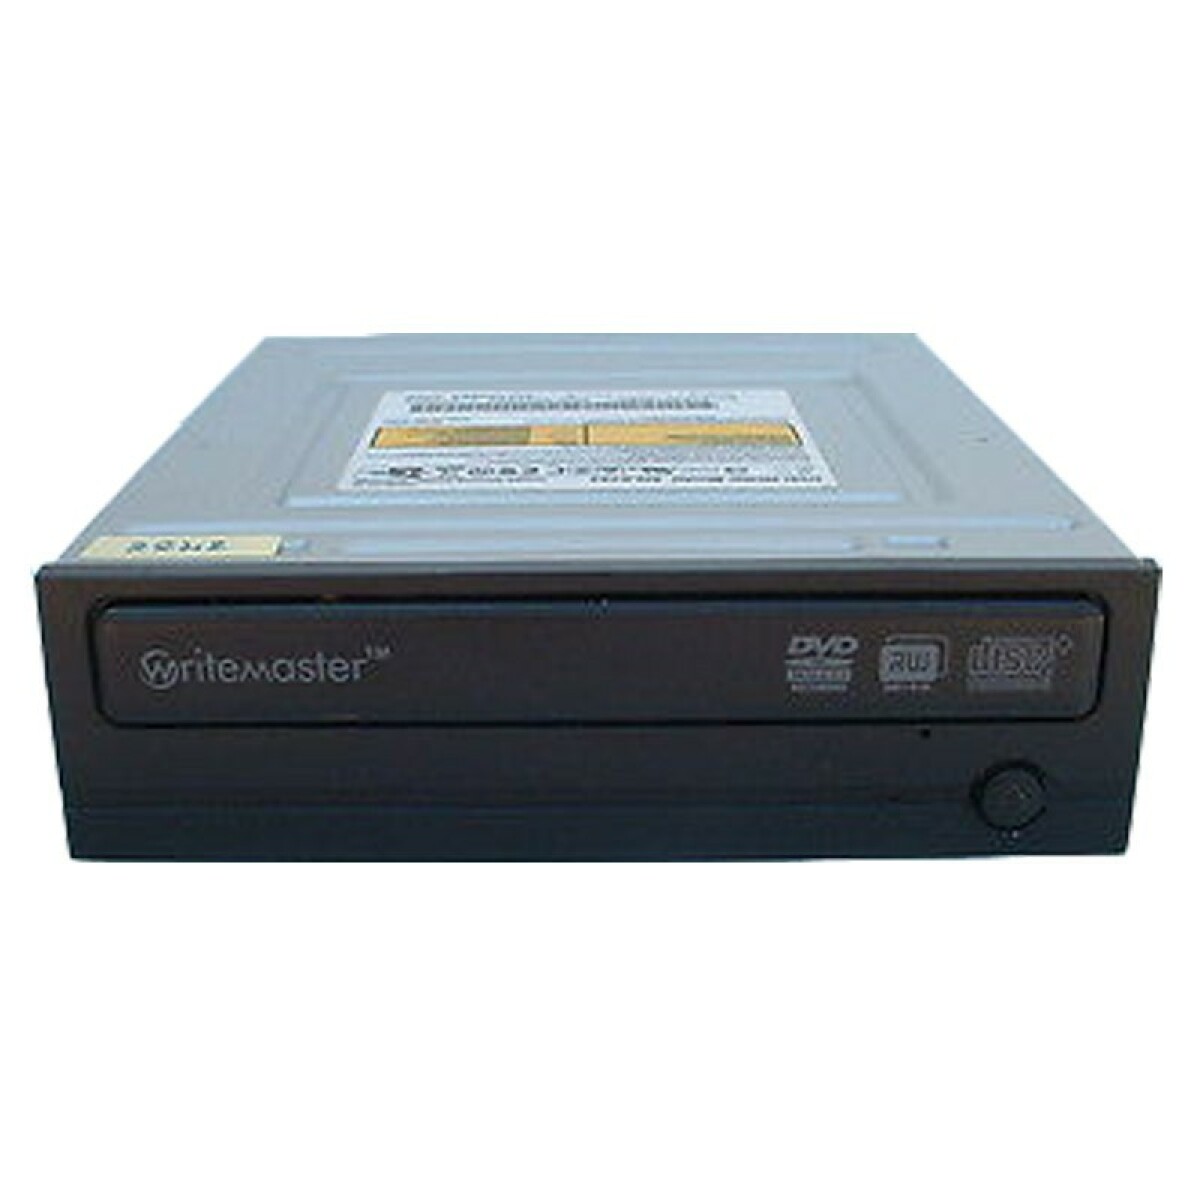 Graveur DVD Interne Samsung Graveur DVD interne 5.25" TOSHIBA SAMSUNG SH-S162 Double Couche 48x16x IDE Noir